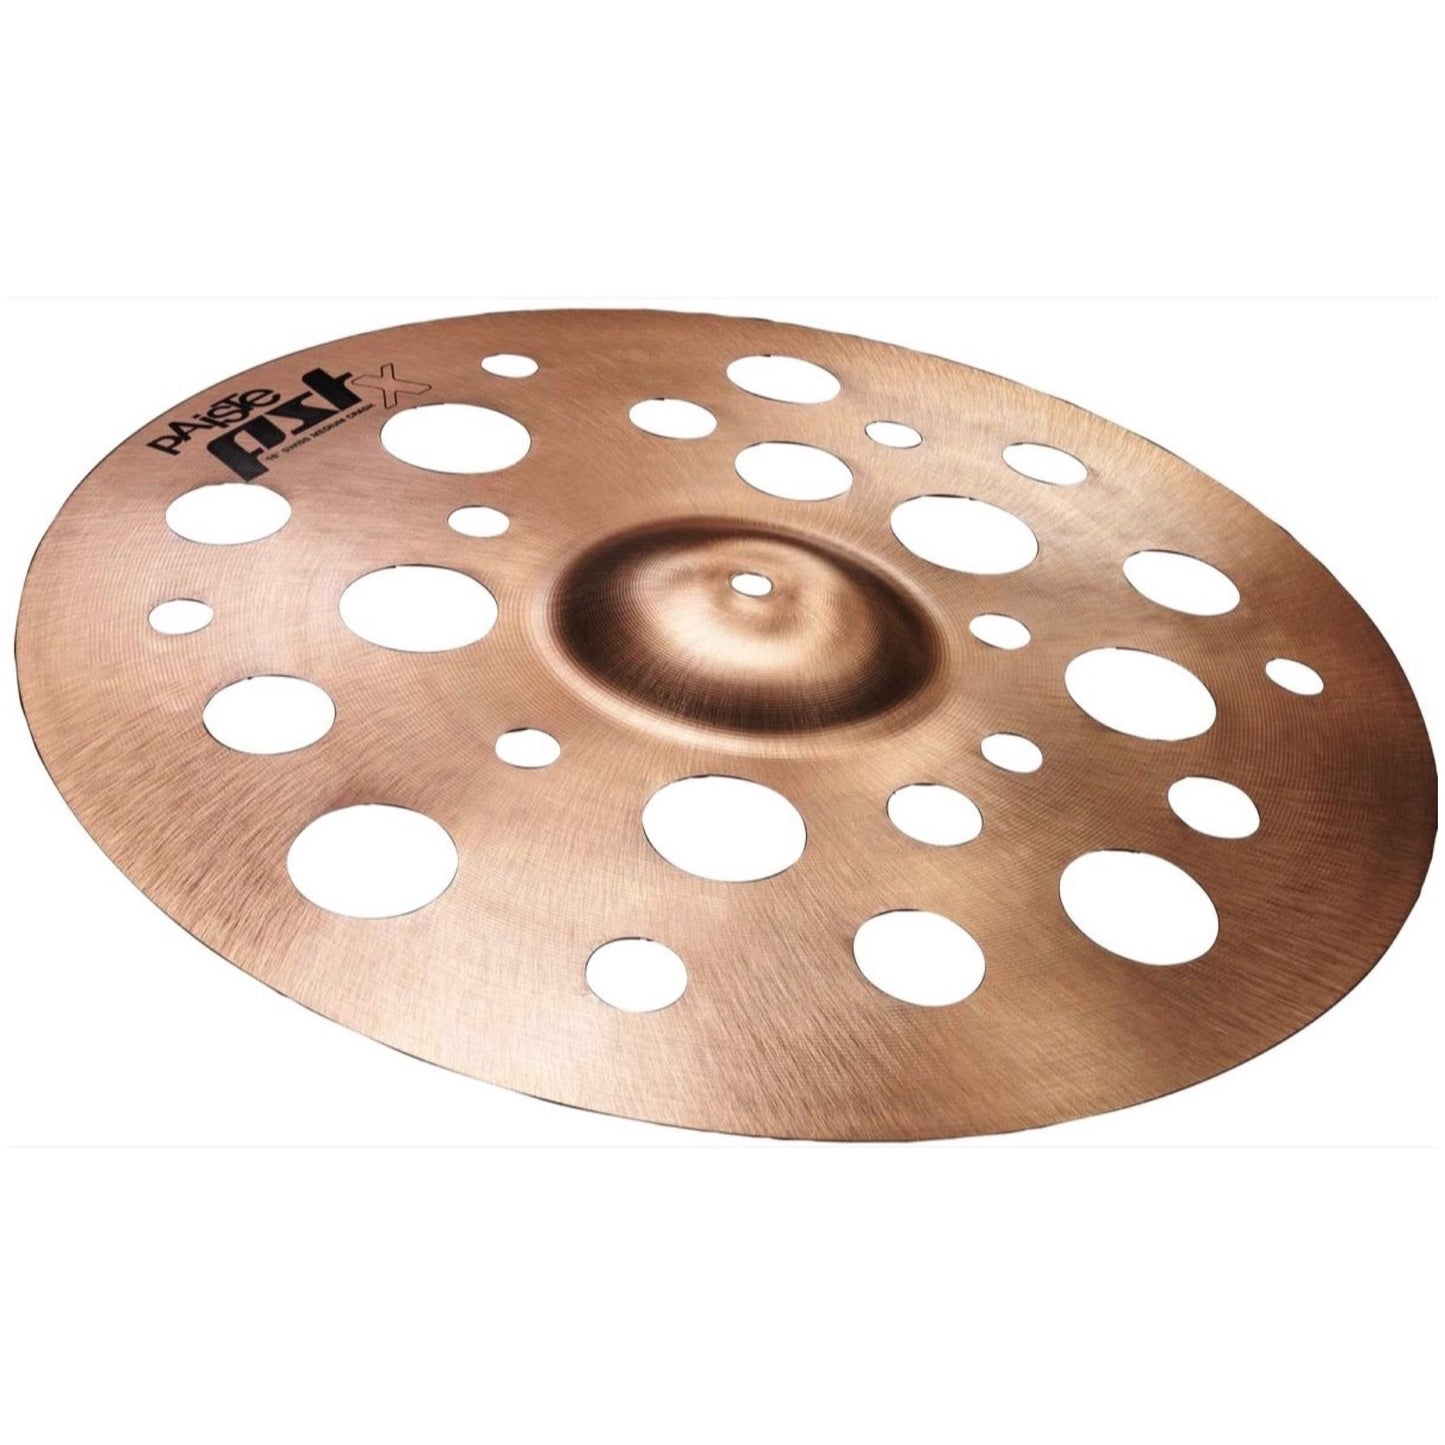 Paiste PST X Swiss Crash Cymbal, 18 Inch Medium